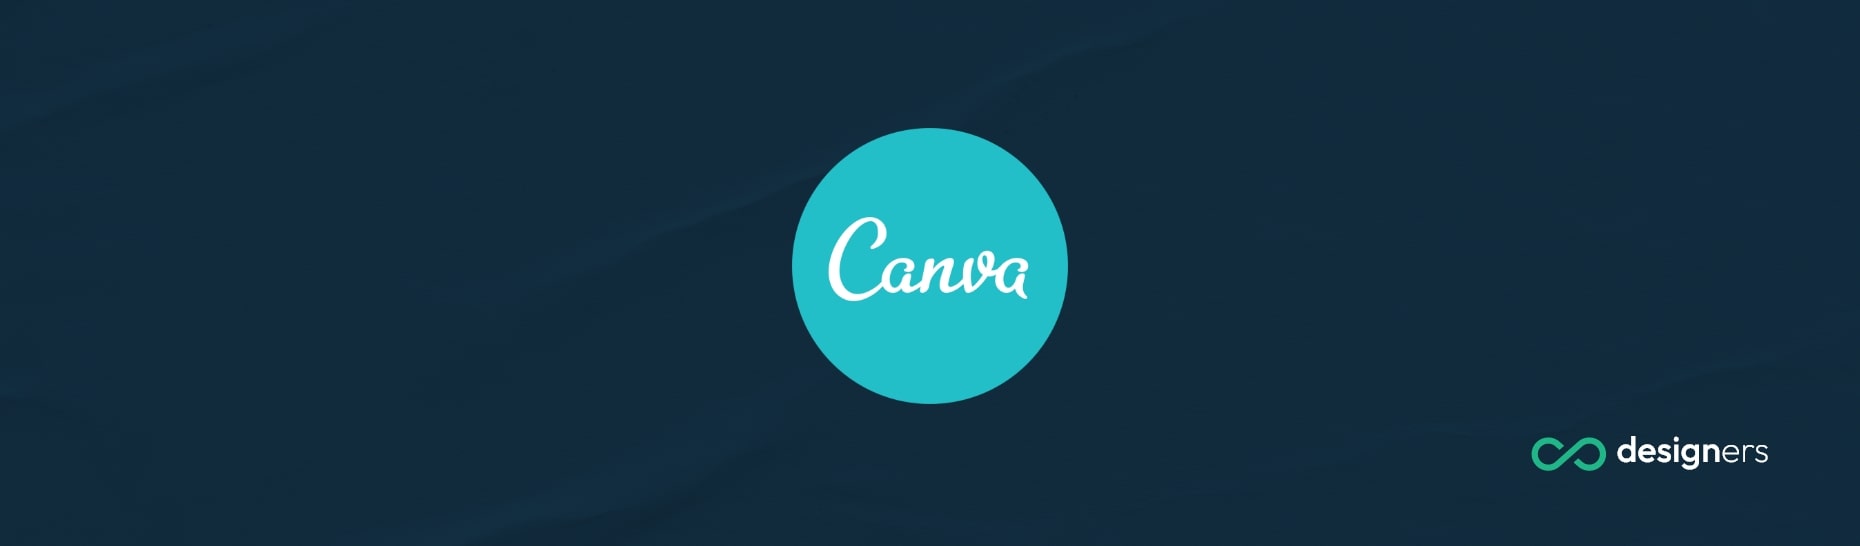 Does Canva Do Web Hosting?